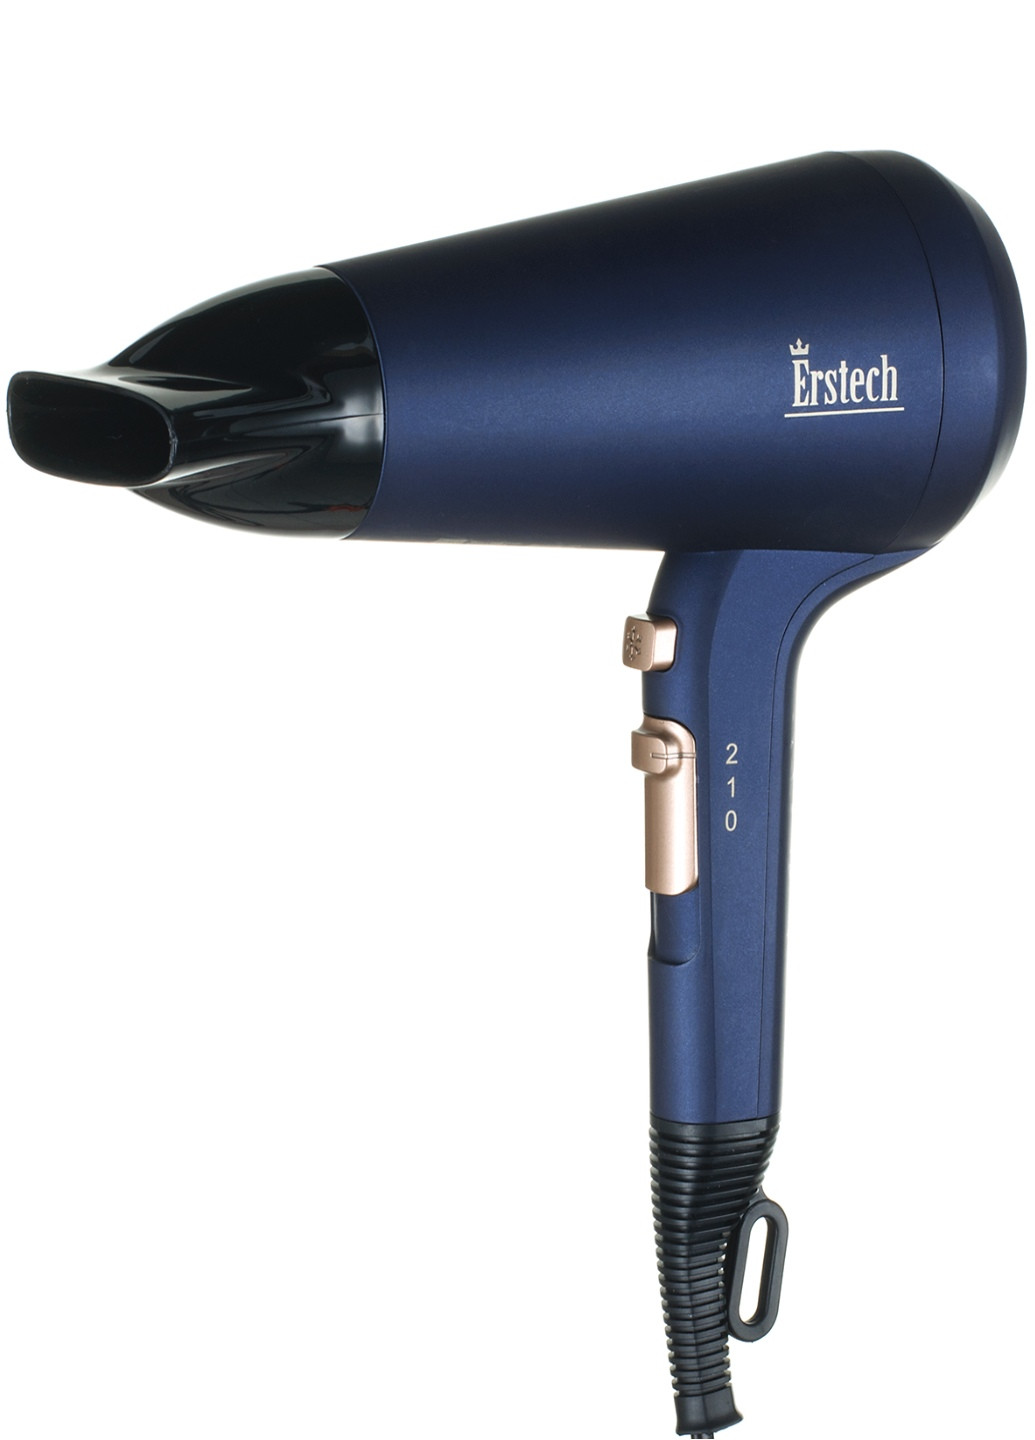 Фен электрический для сушки и укладки волос 220 В; арт.HD220/02ER; т.м. Erstech hd220/02er_blue (197140490)